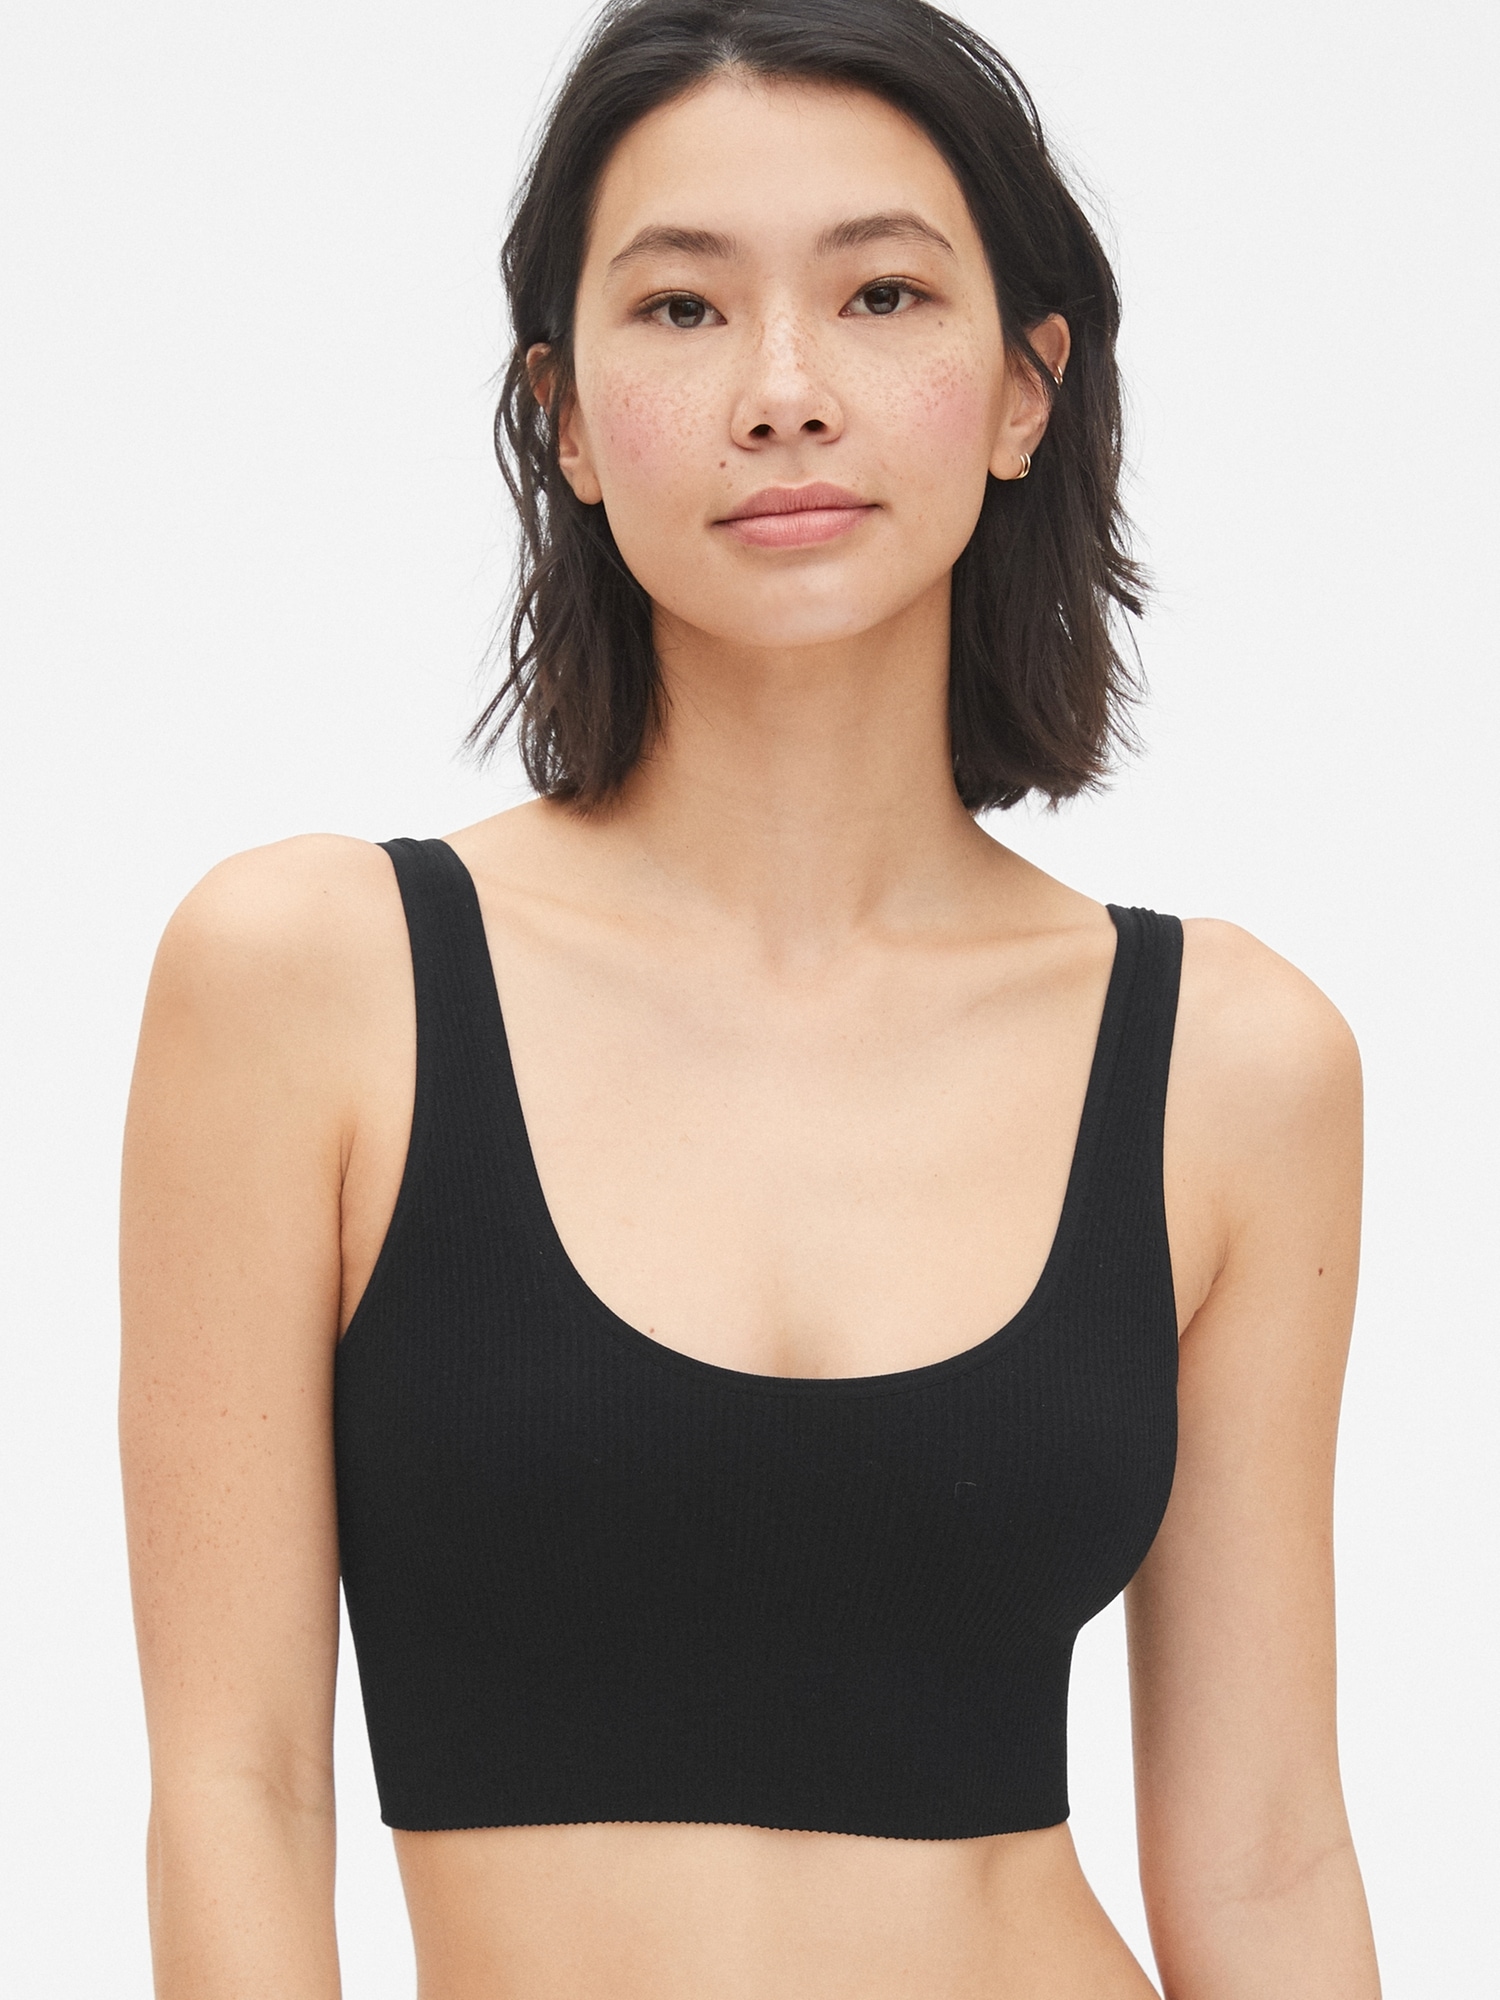 GapBody bras  Body bra, Gap body, Women shopping